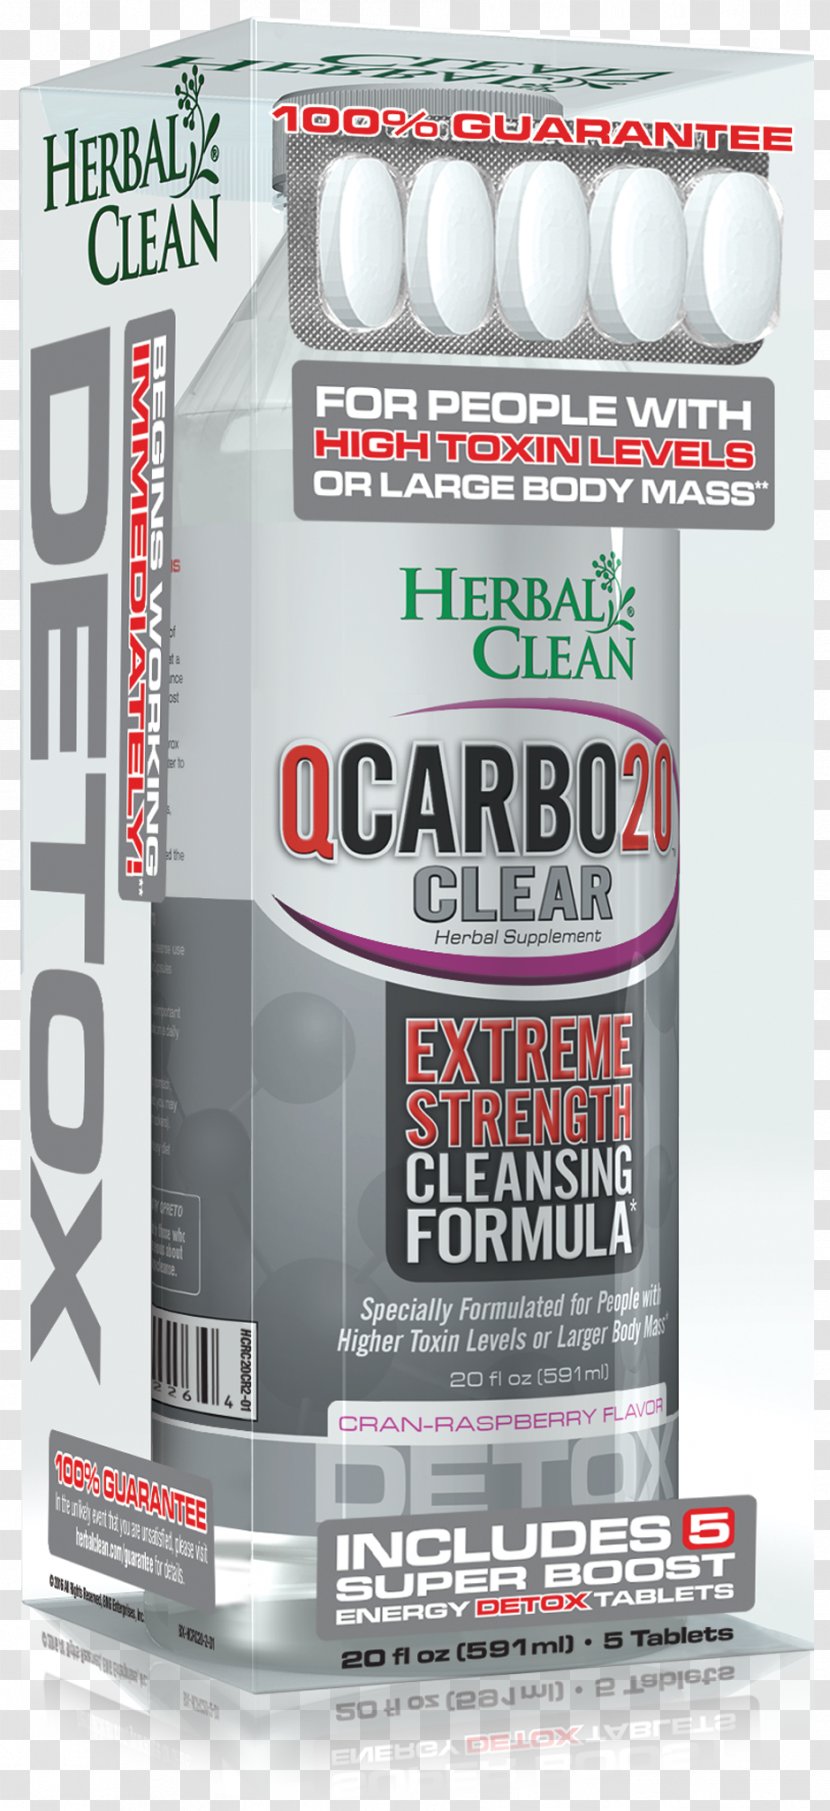 HERBAL CLEAN DETOX Q Carbo Liquid Grape 16 OZ BNG Enterprises Herbal Clean QCarbo20 Clear Extreme Strength Cleansing Formula Lemon-Lime Flavor Detoxification Drink Cleanser - Brand - Cleanse Transparent PNG